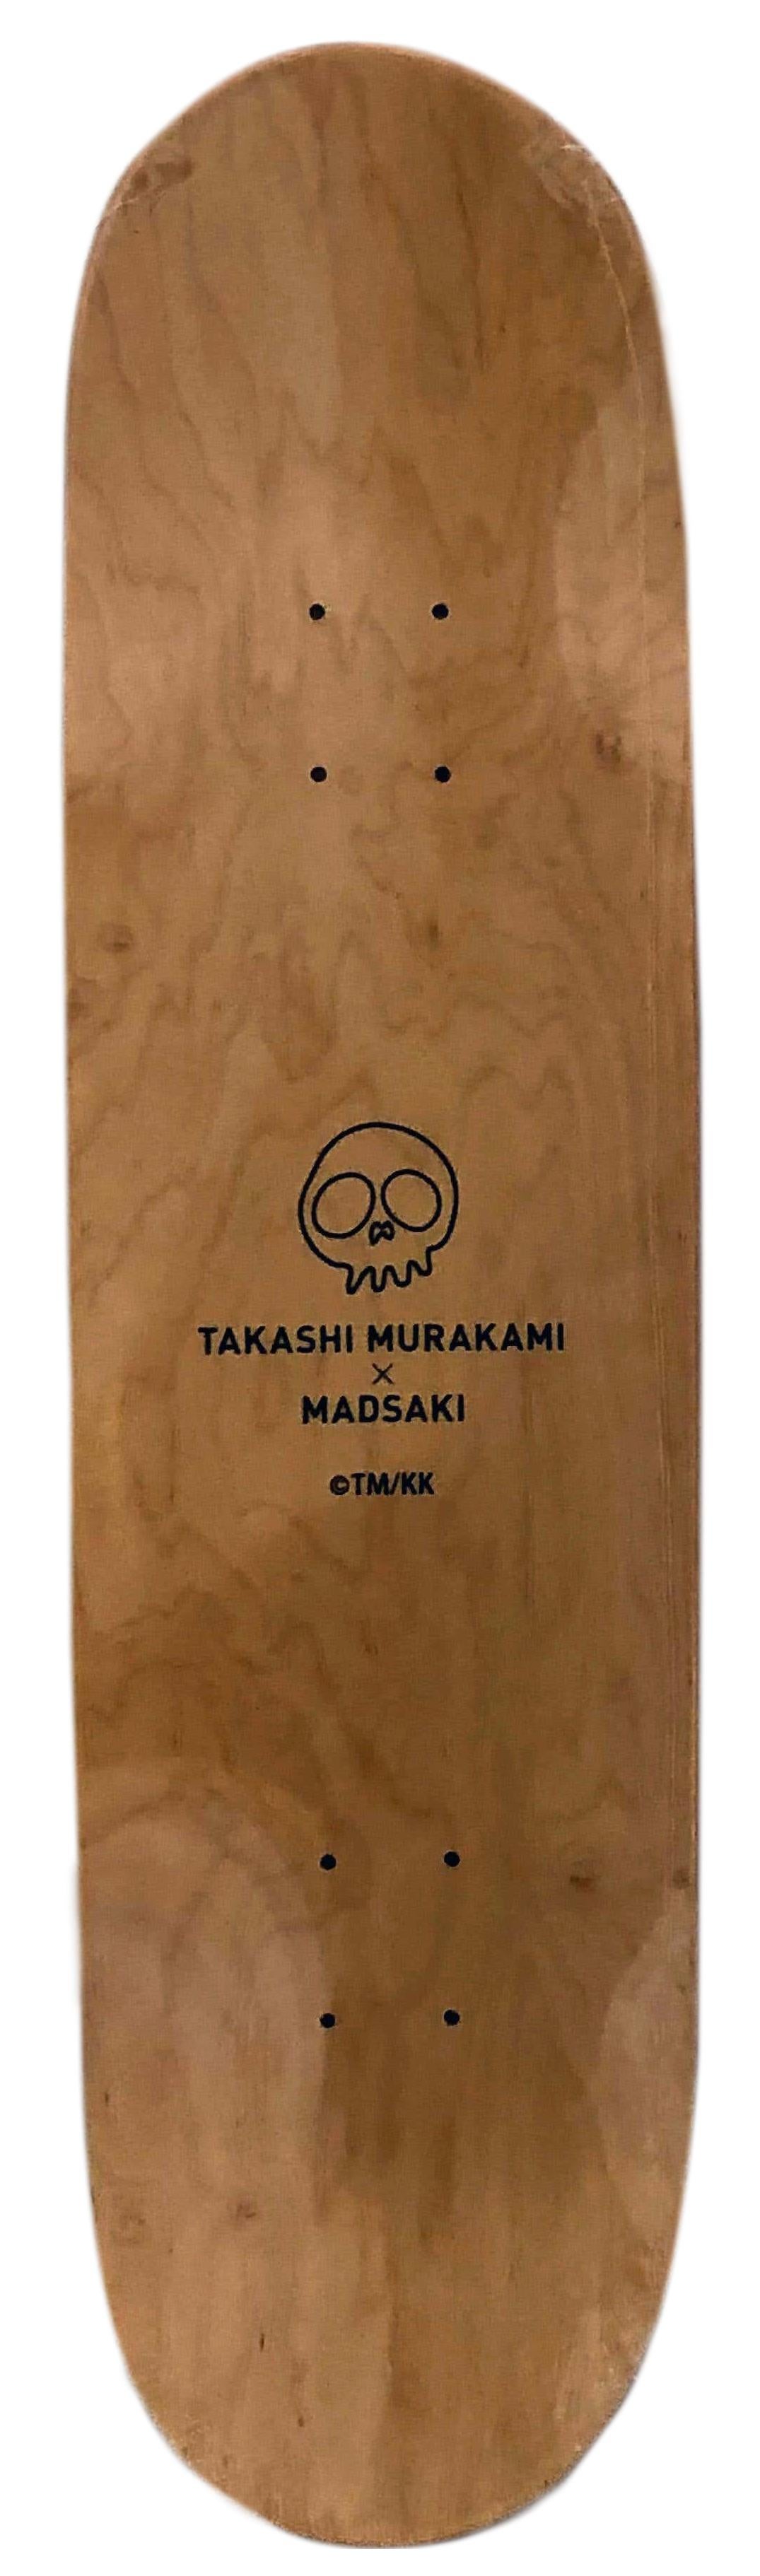 Takashi Murakami Flowers Skateboard Decks: set of 3 works (Murakami skateboard) For Sale 7